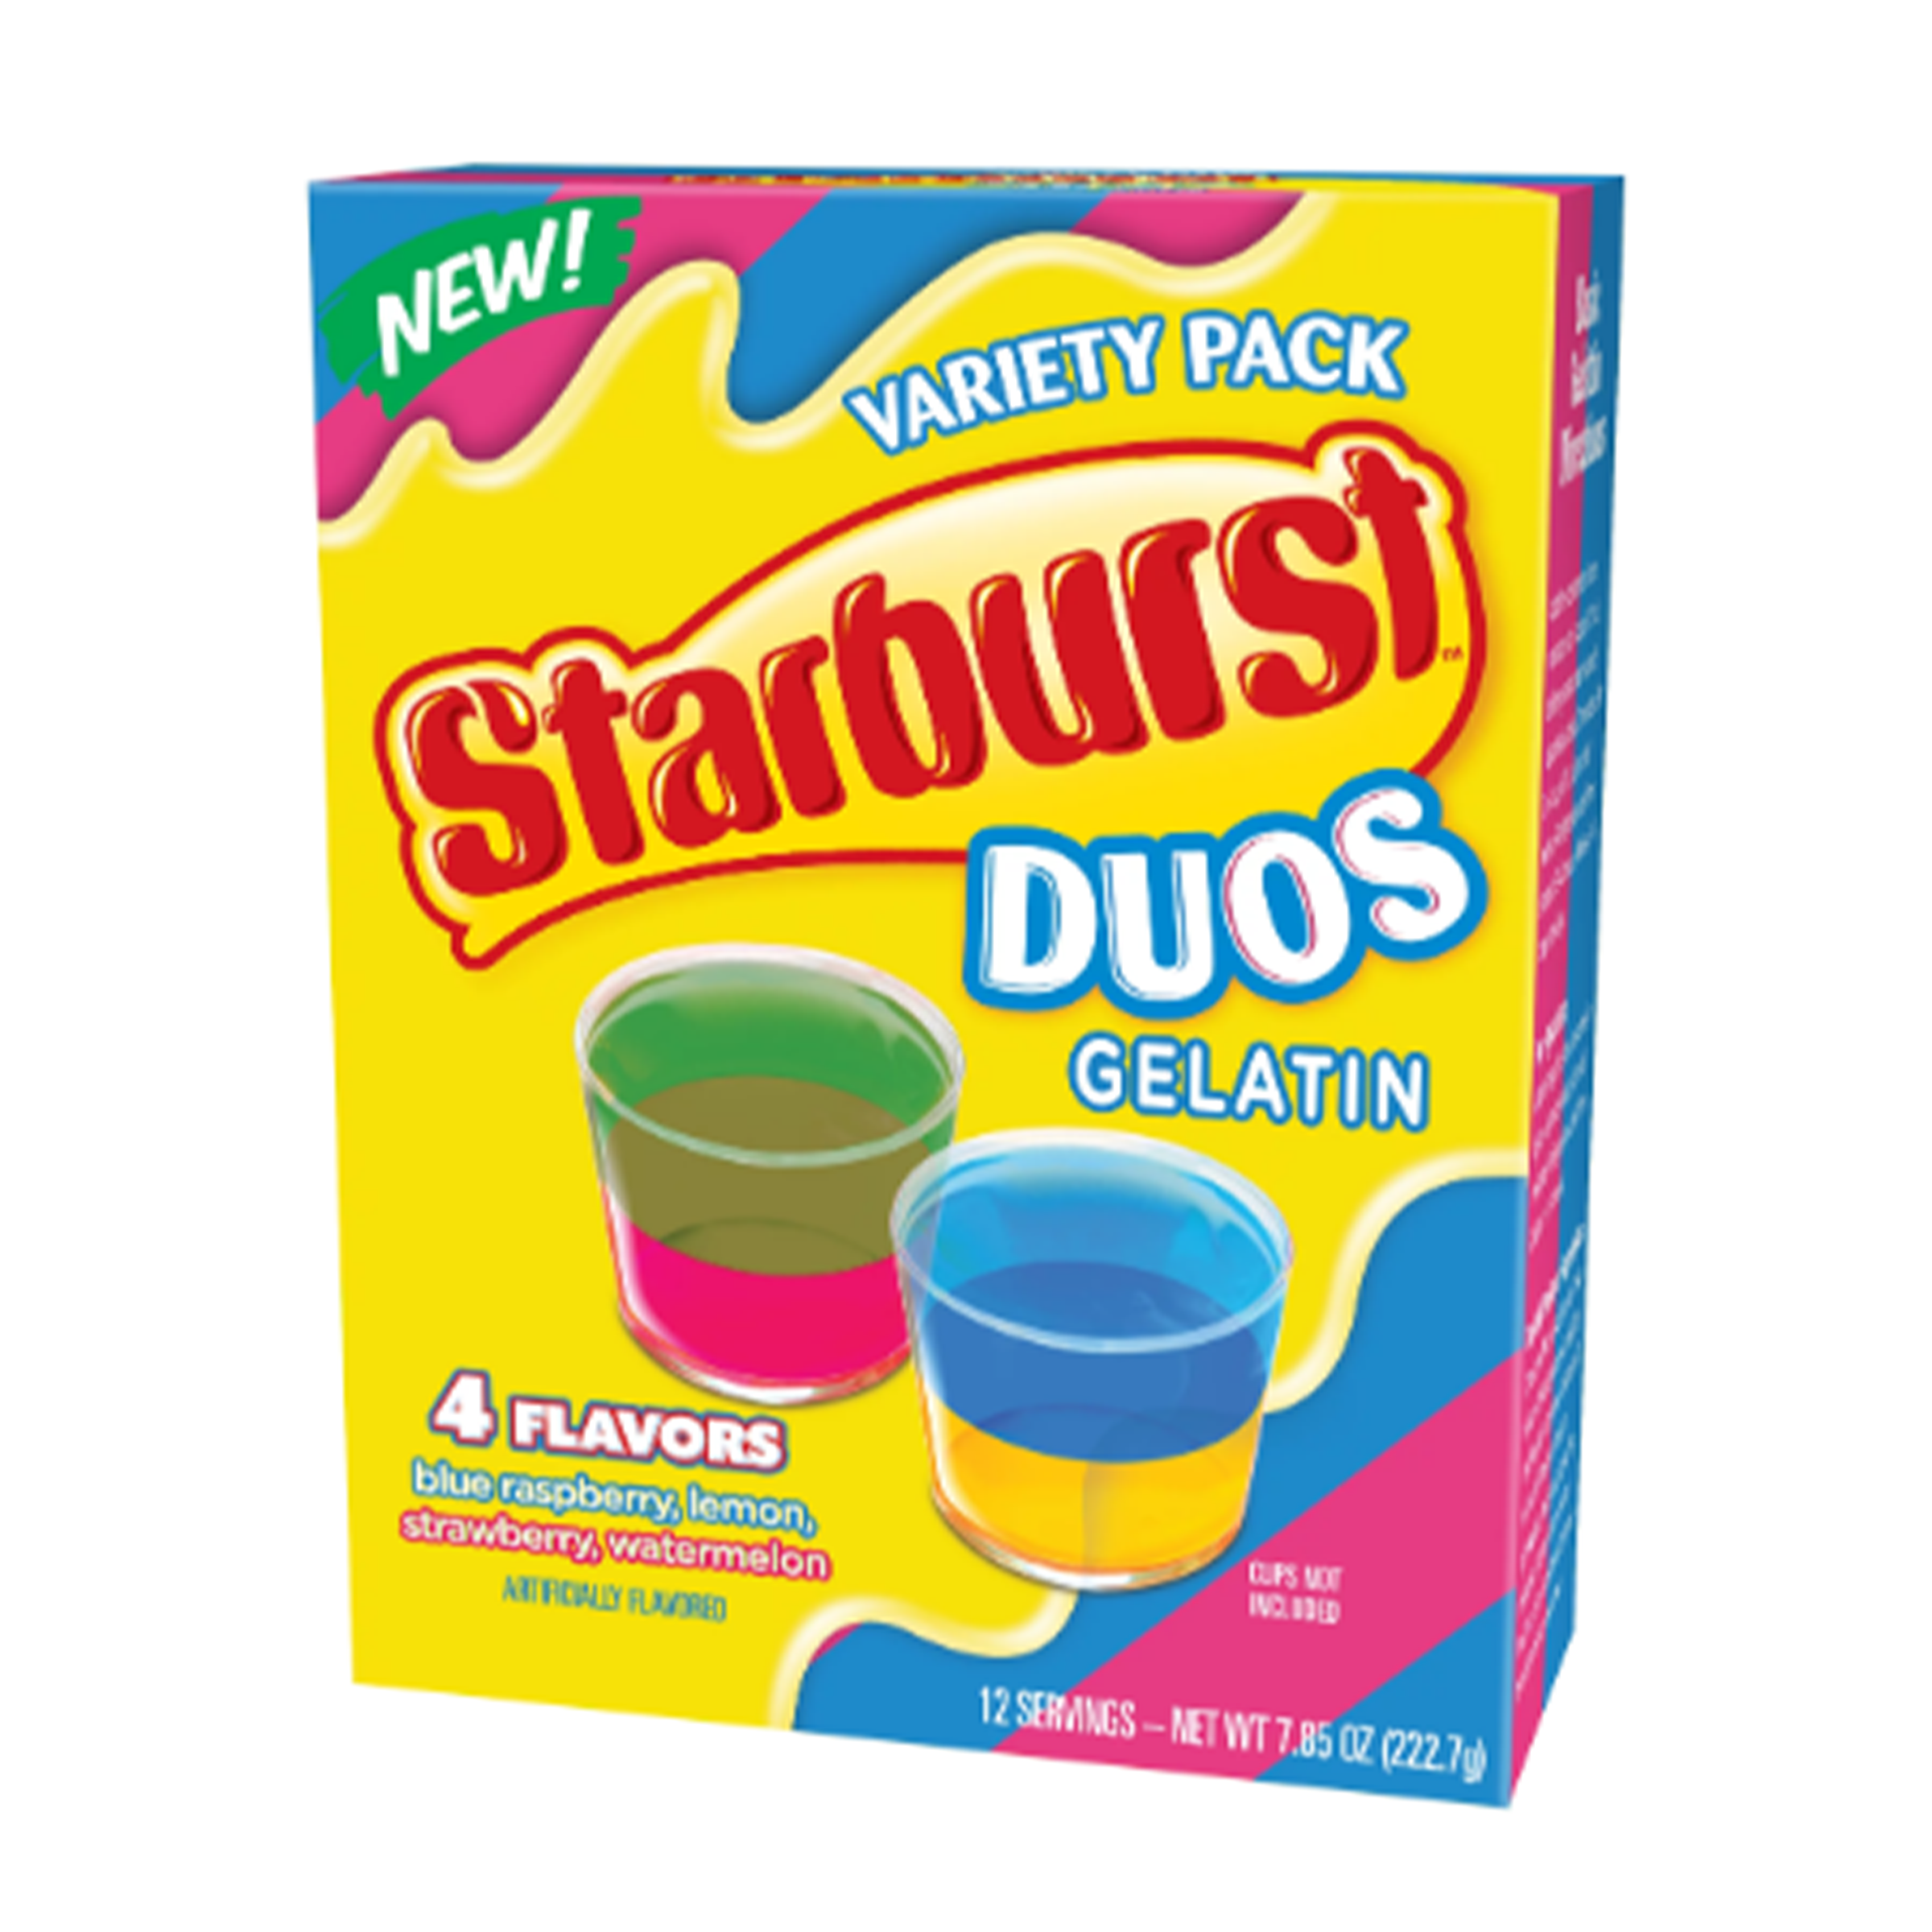 Starburst Jello - Duo's